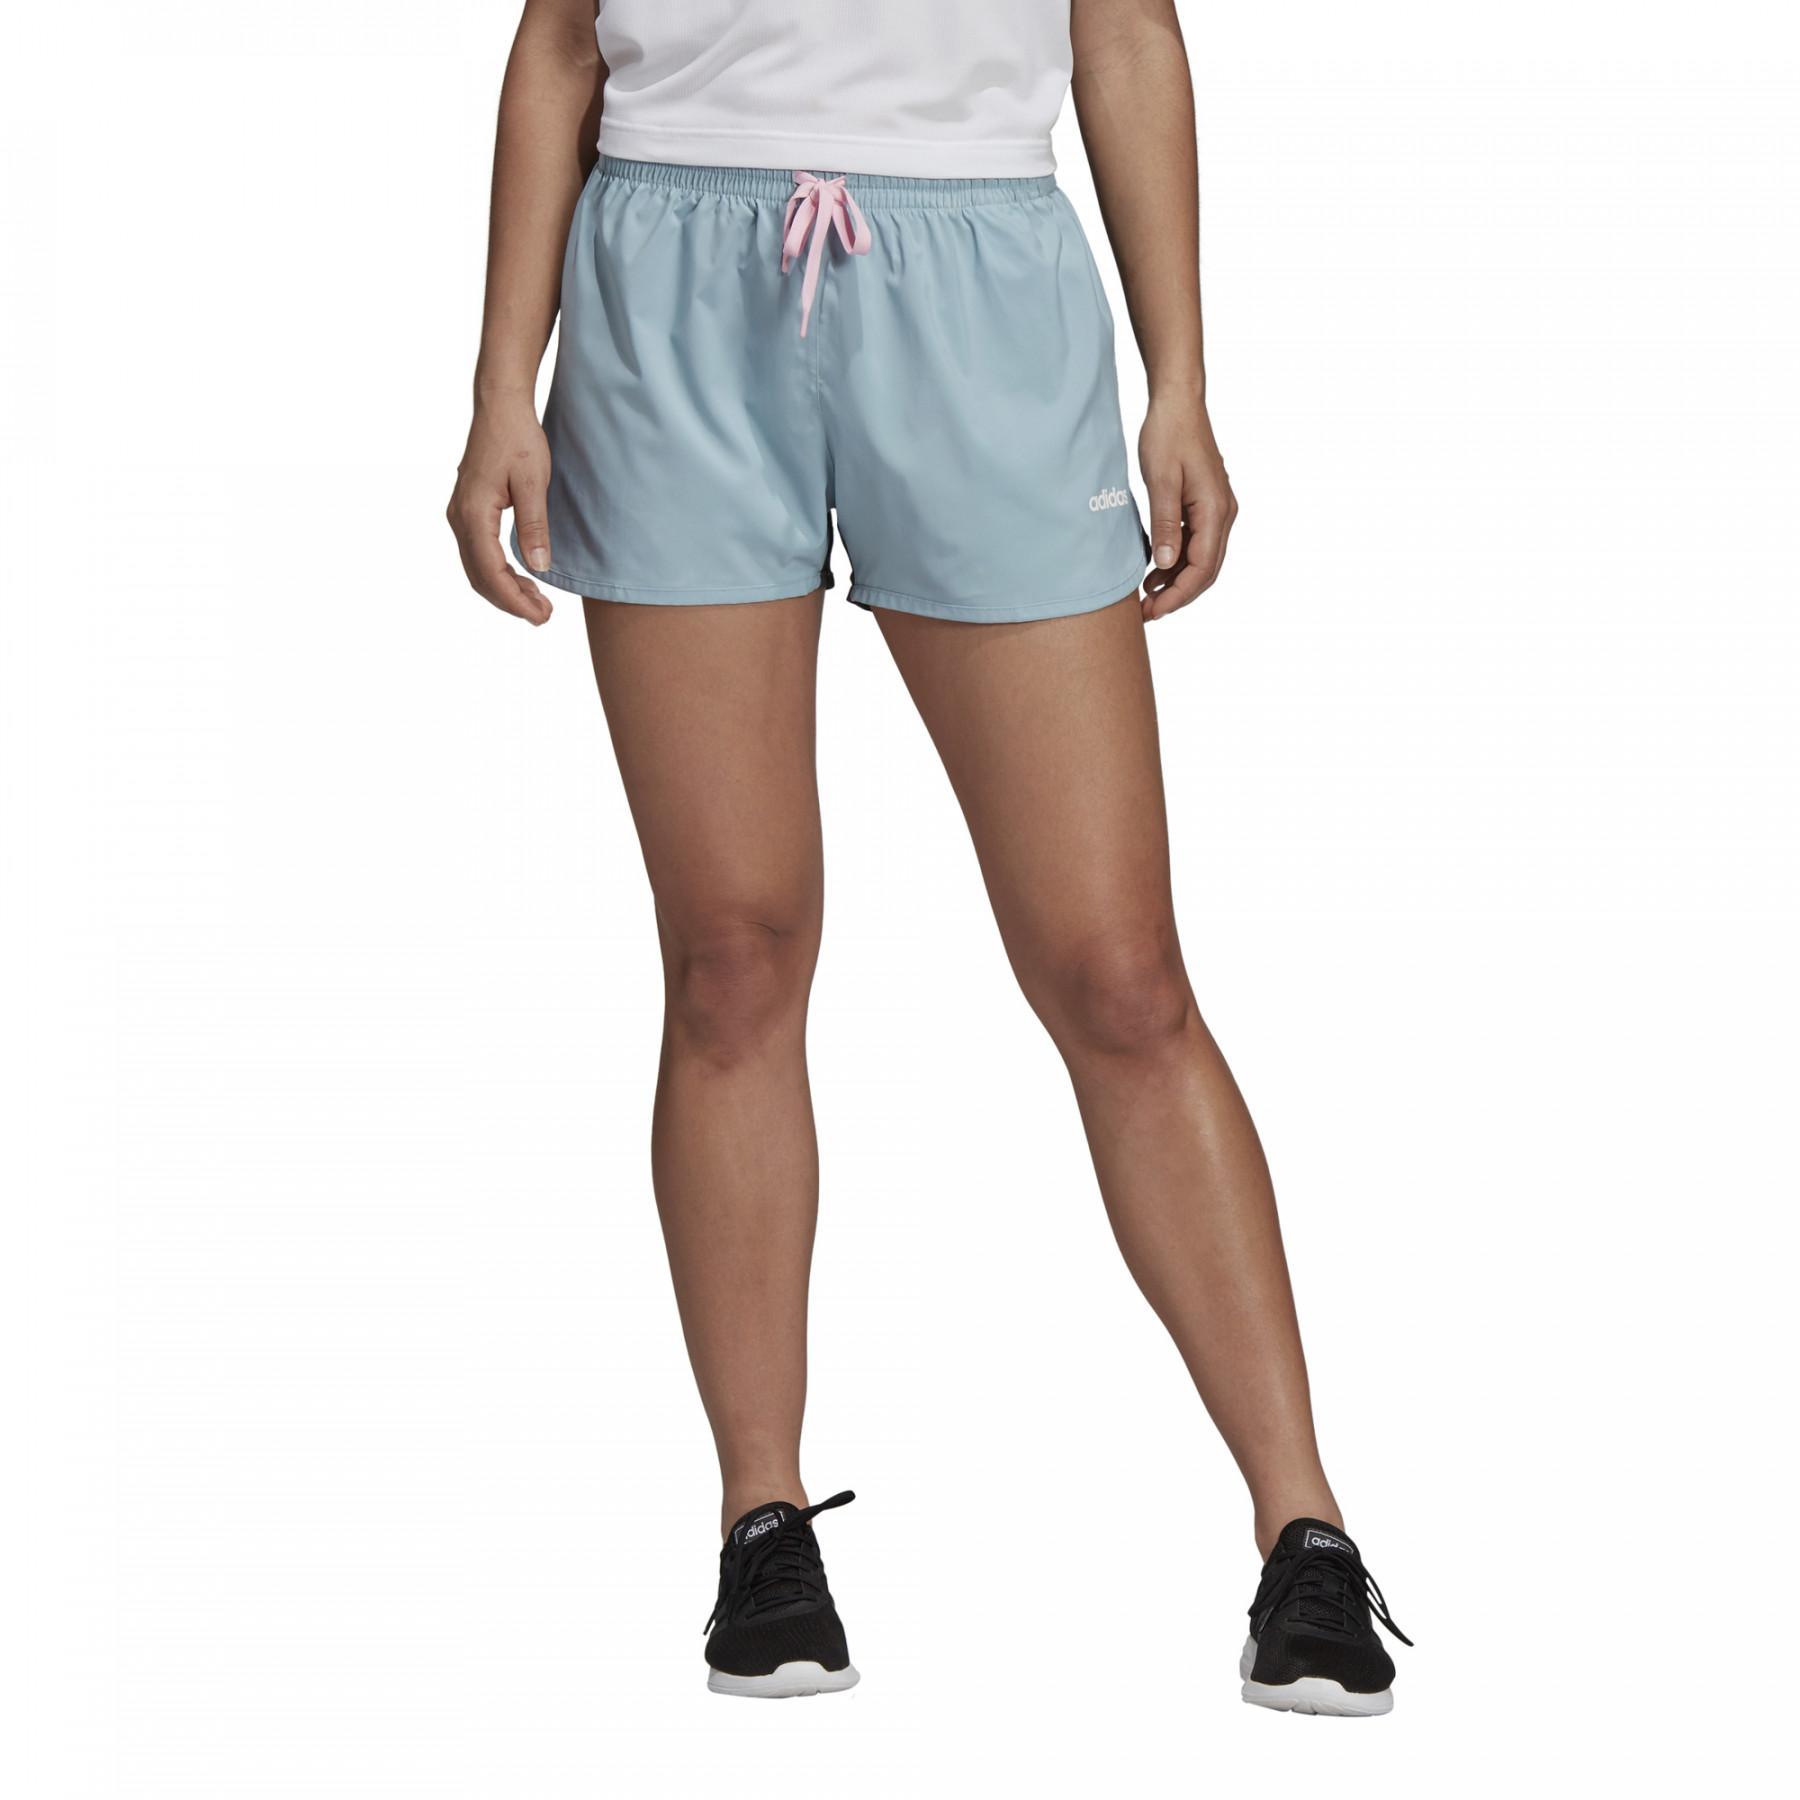 Women's shorts adidas Design 2 Move